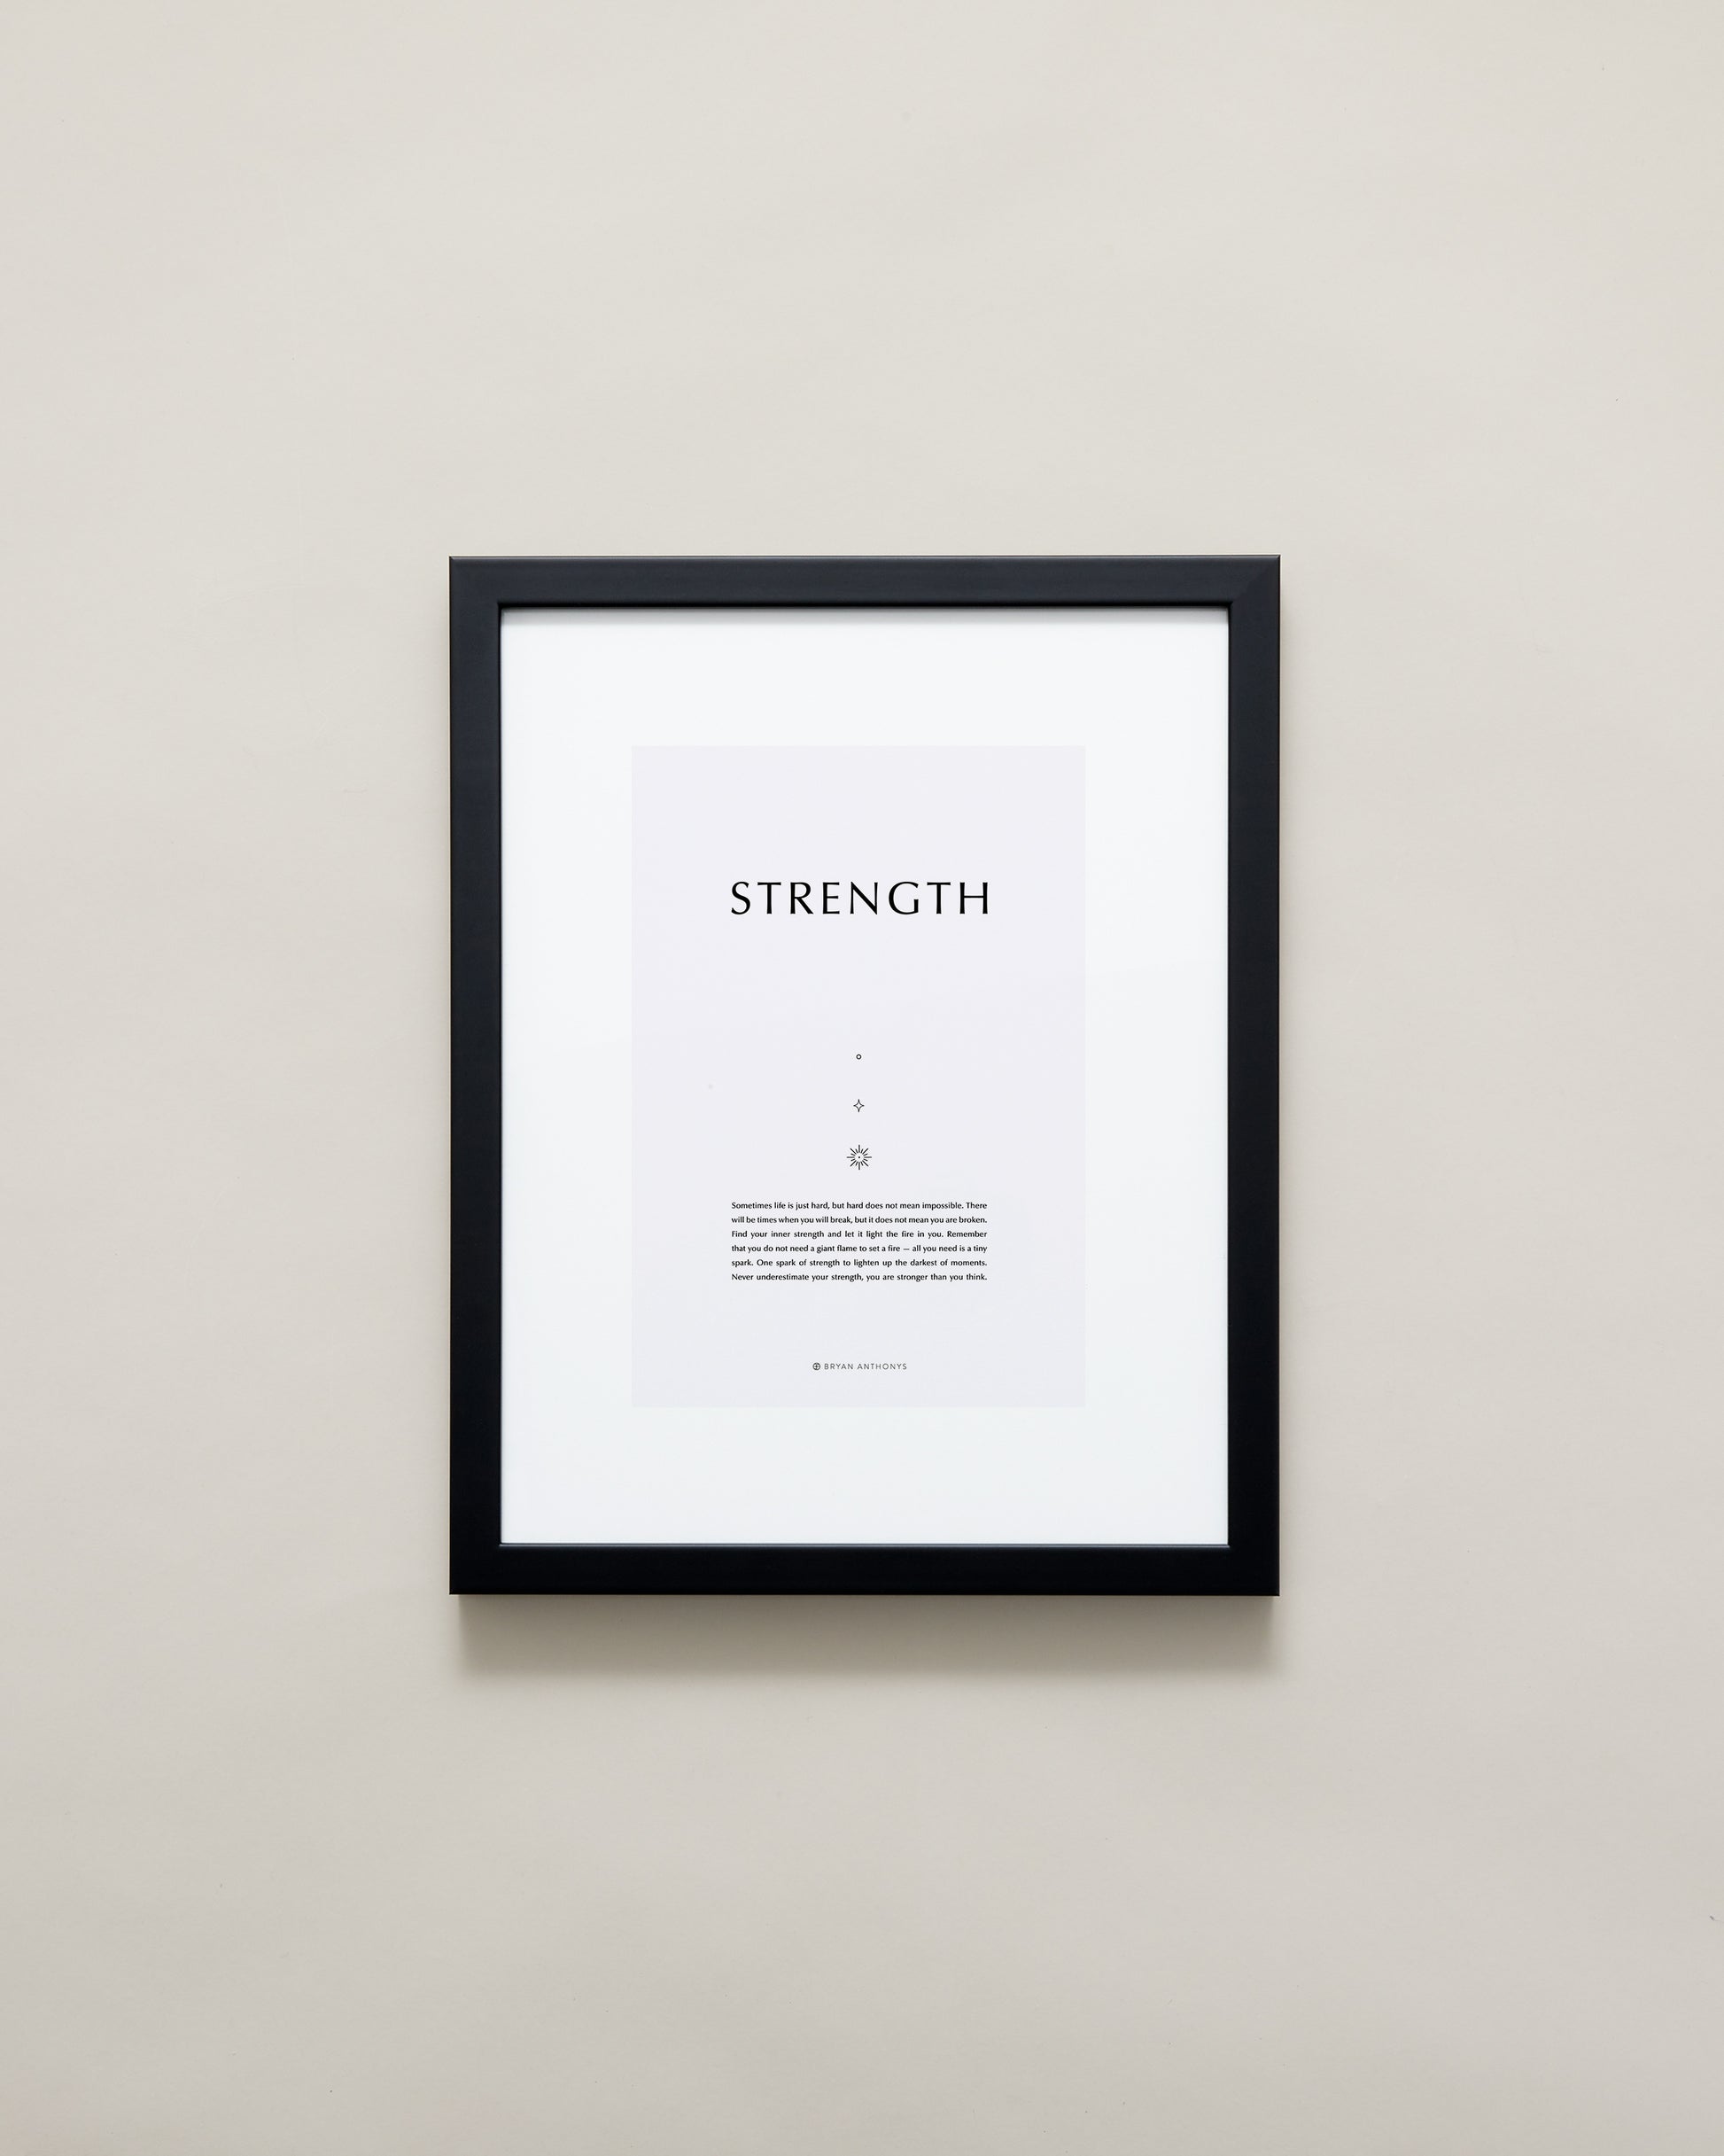 Bryan Anthonys Home Decor Purposeful Prints Strength Iconic Framed Print Gray Art With Black Frame 11x14